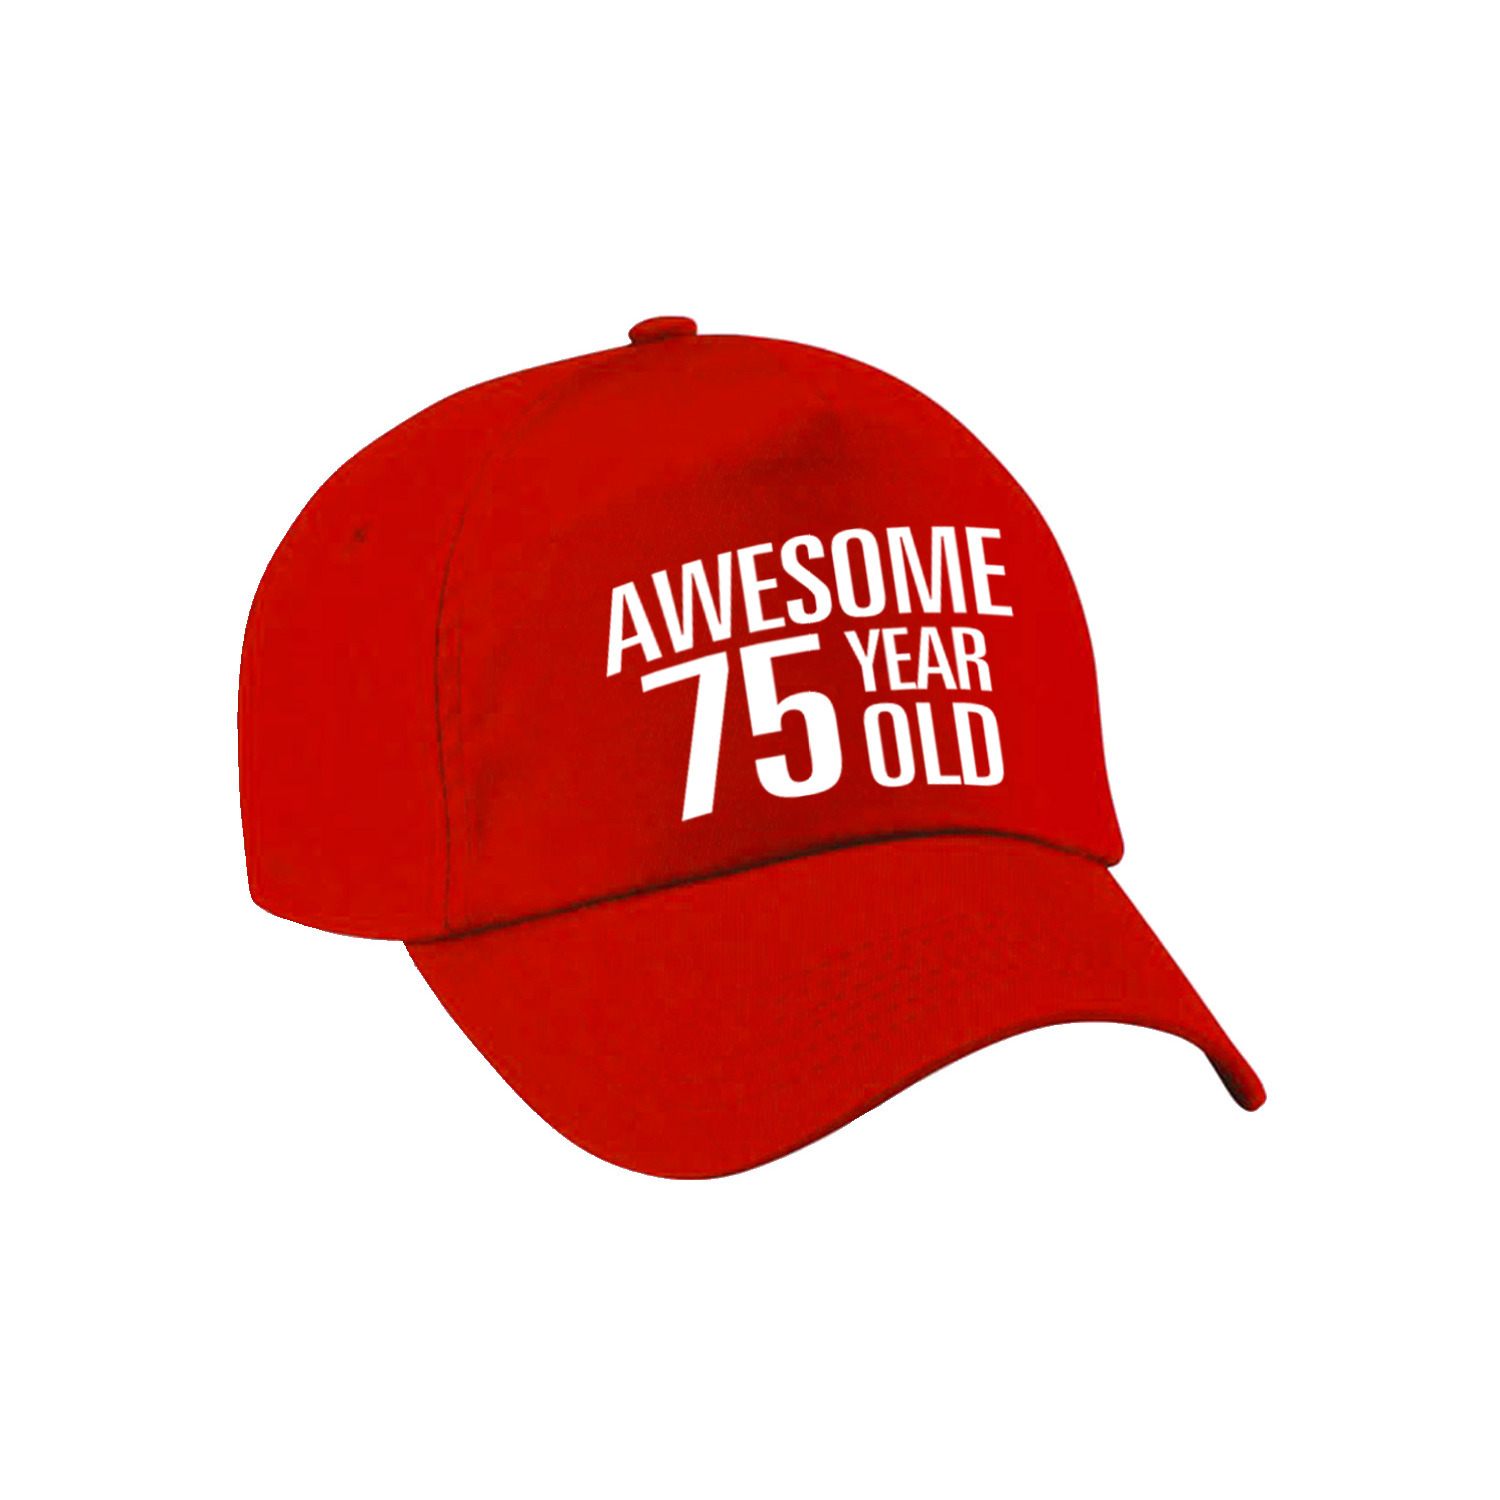 Awesome 75 year old verjaardag pet / cap rood voor dames en heren